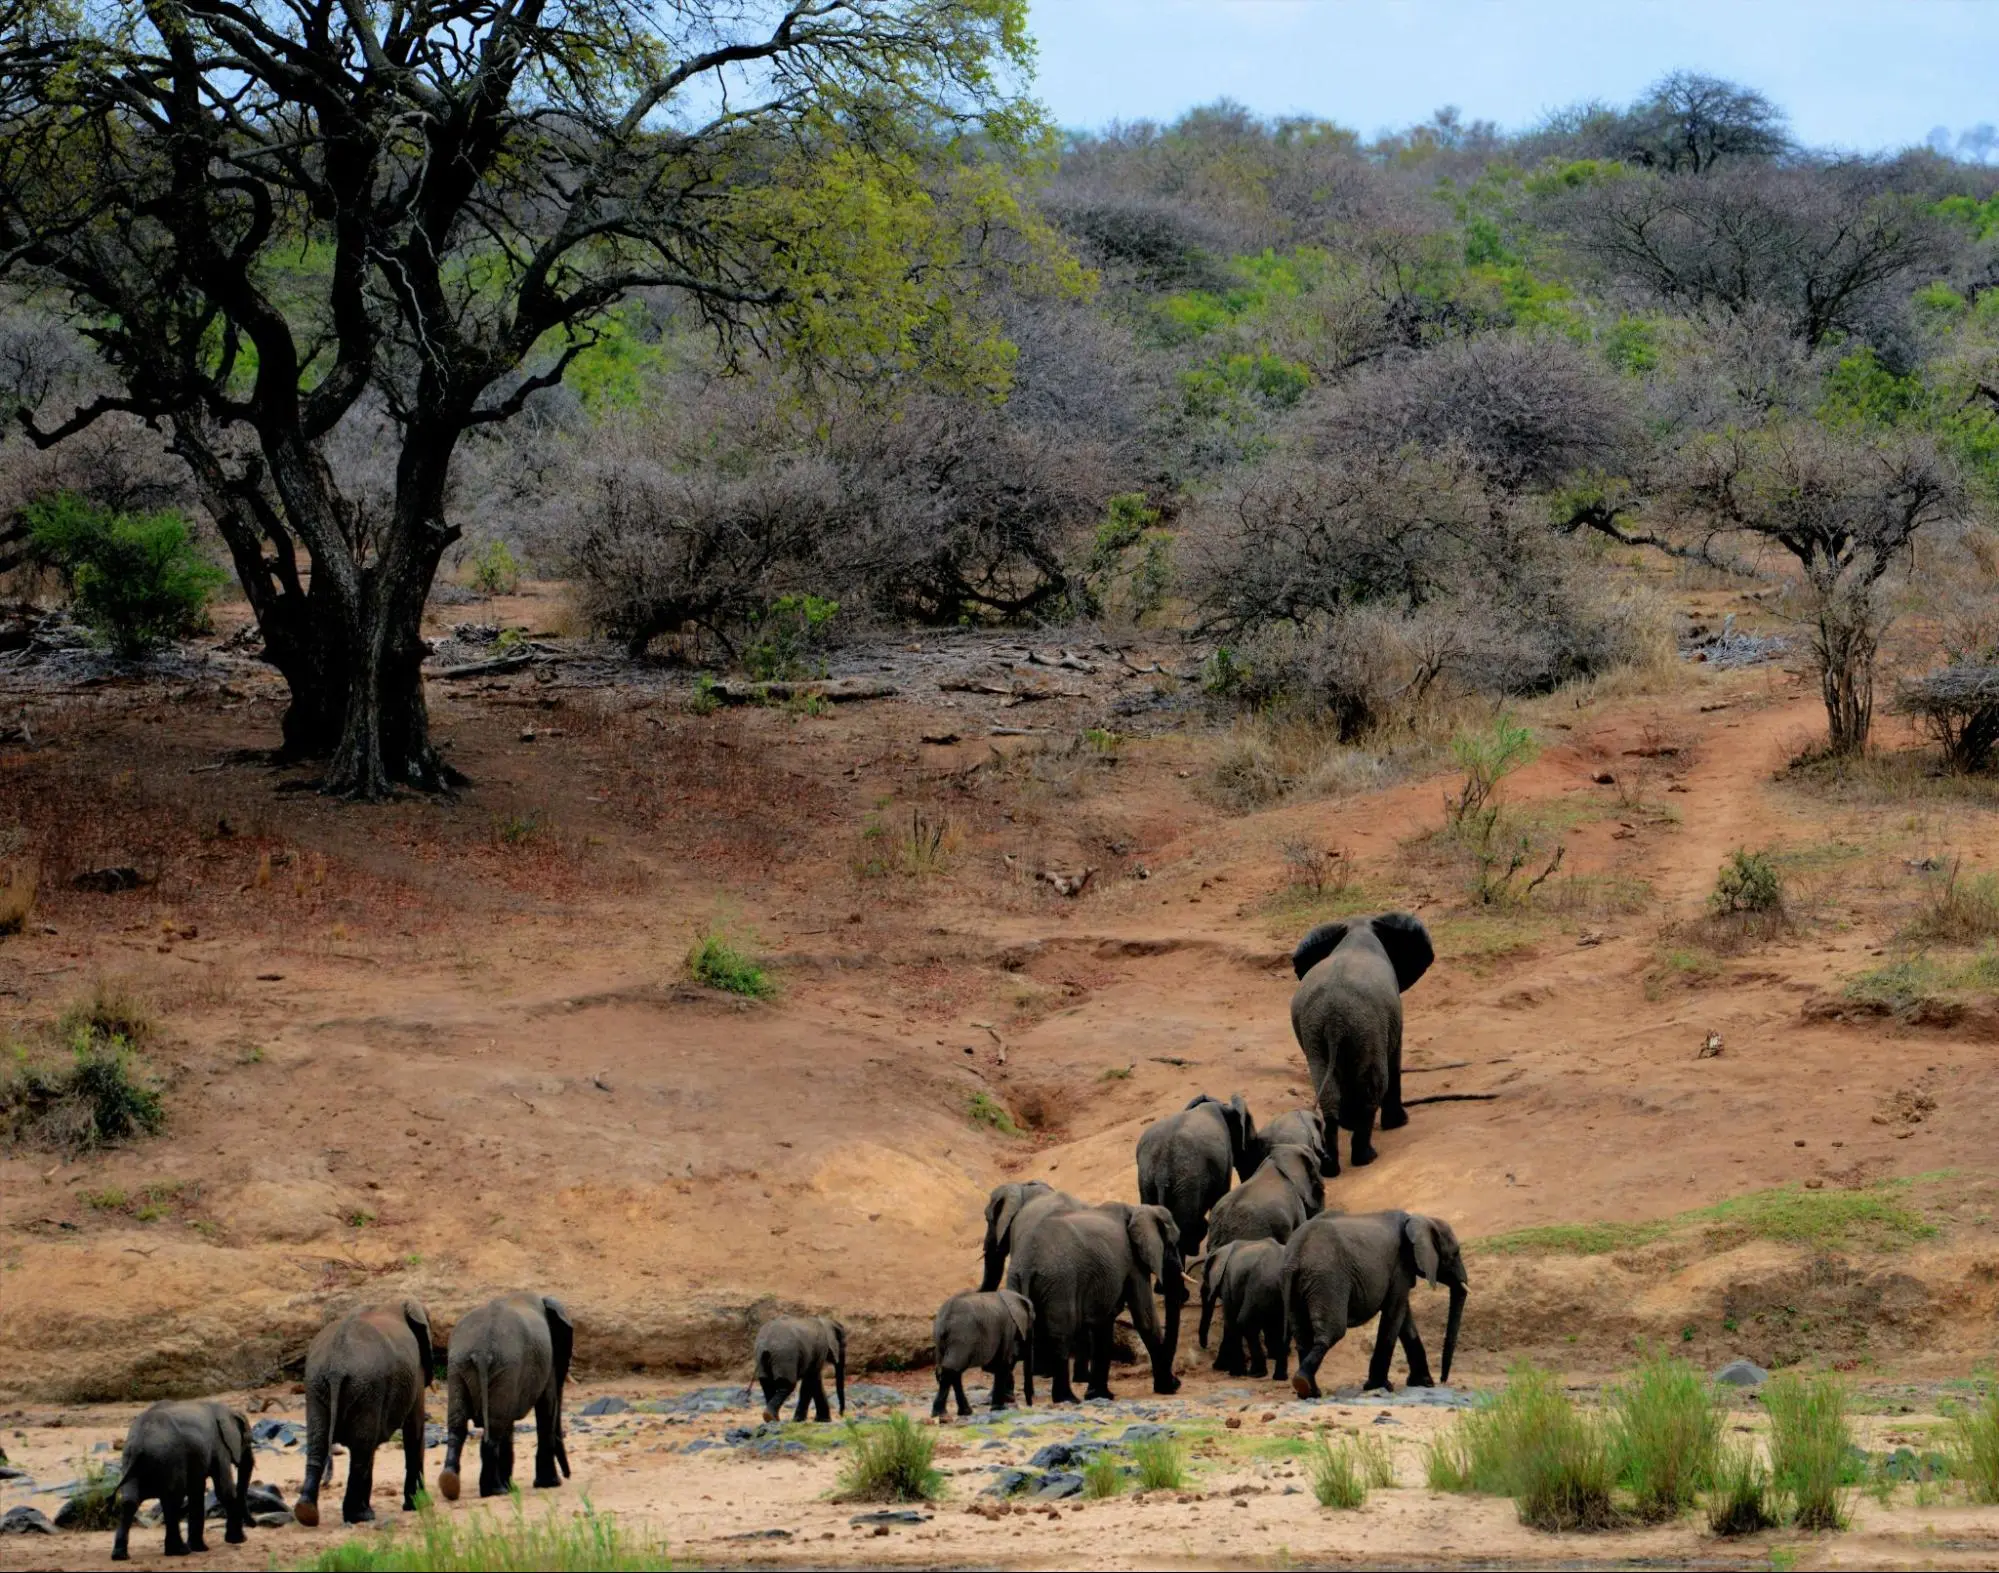 African bush elephants gracefully crossing a dirt field in Serengeti National Park.